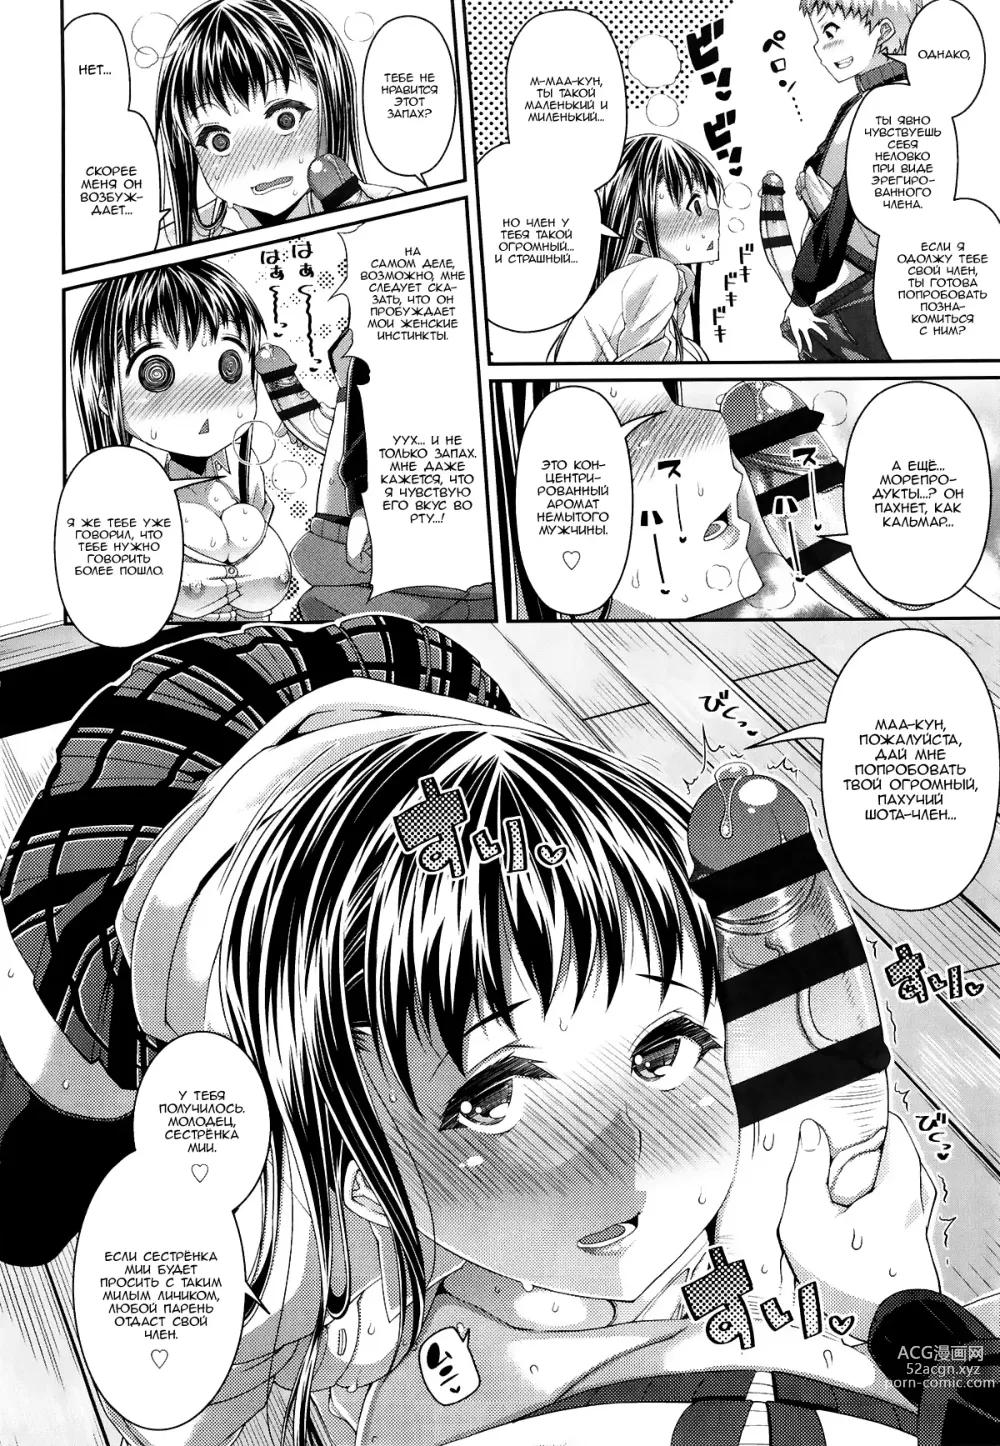 Page 6 of manga Ane wa Gehin ni Utsukushiku